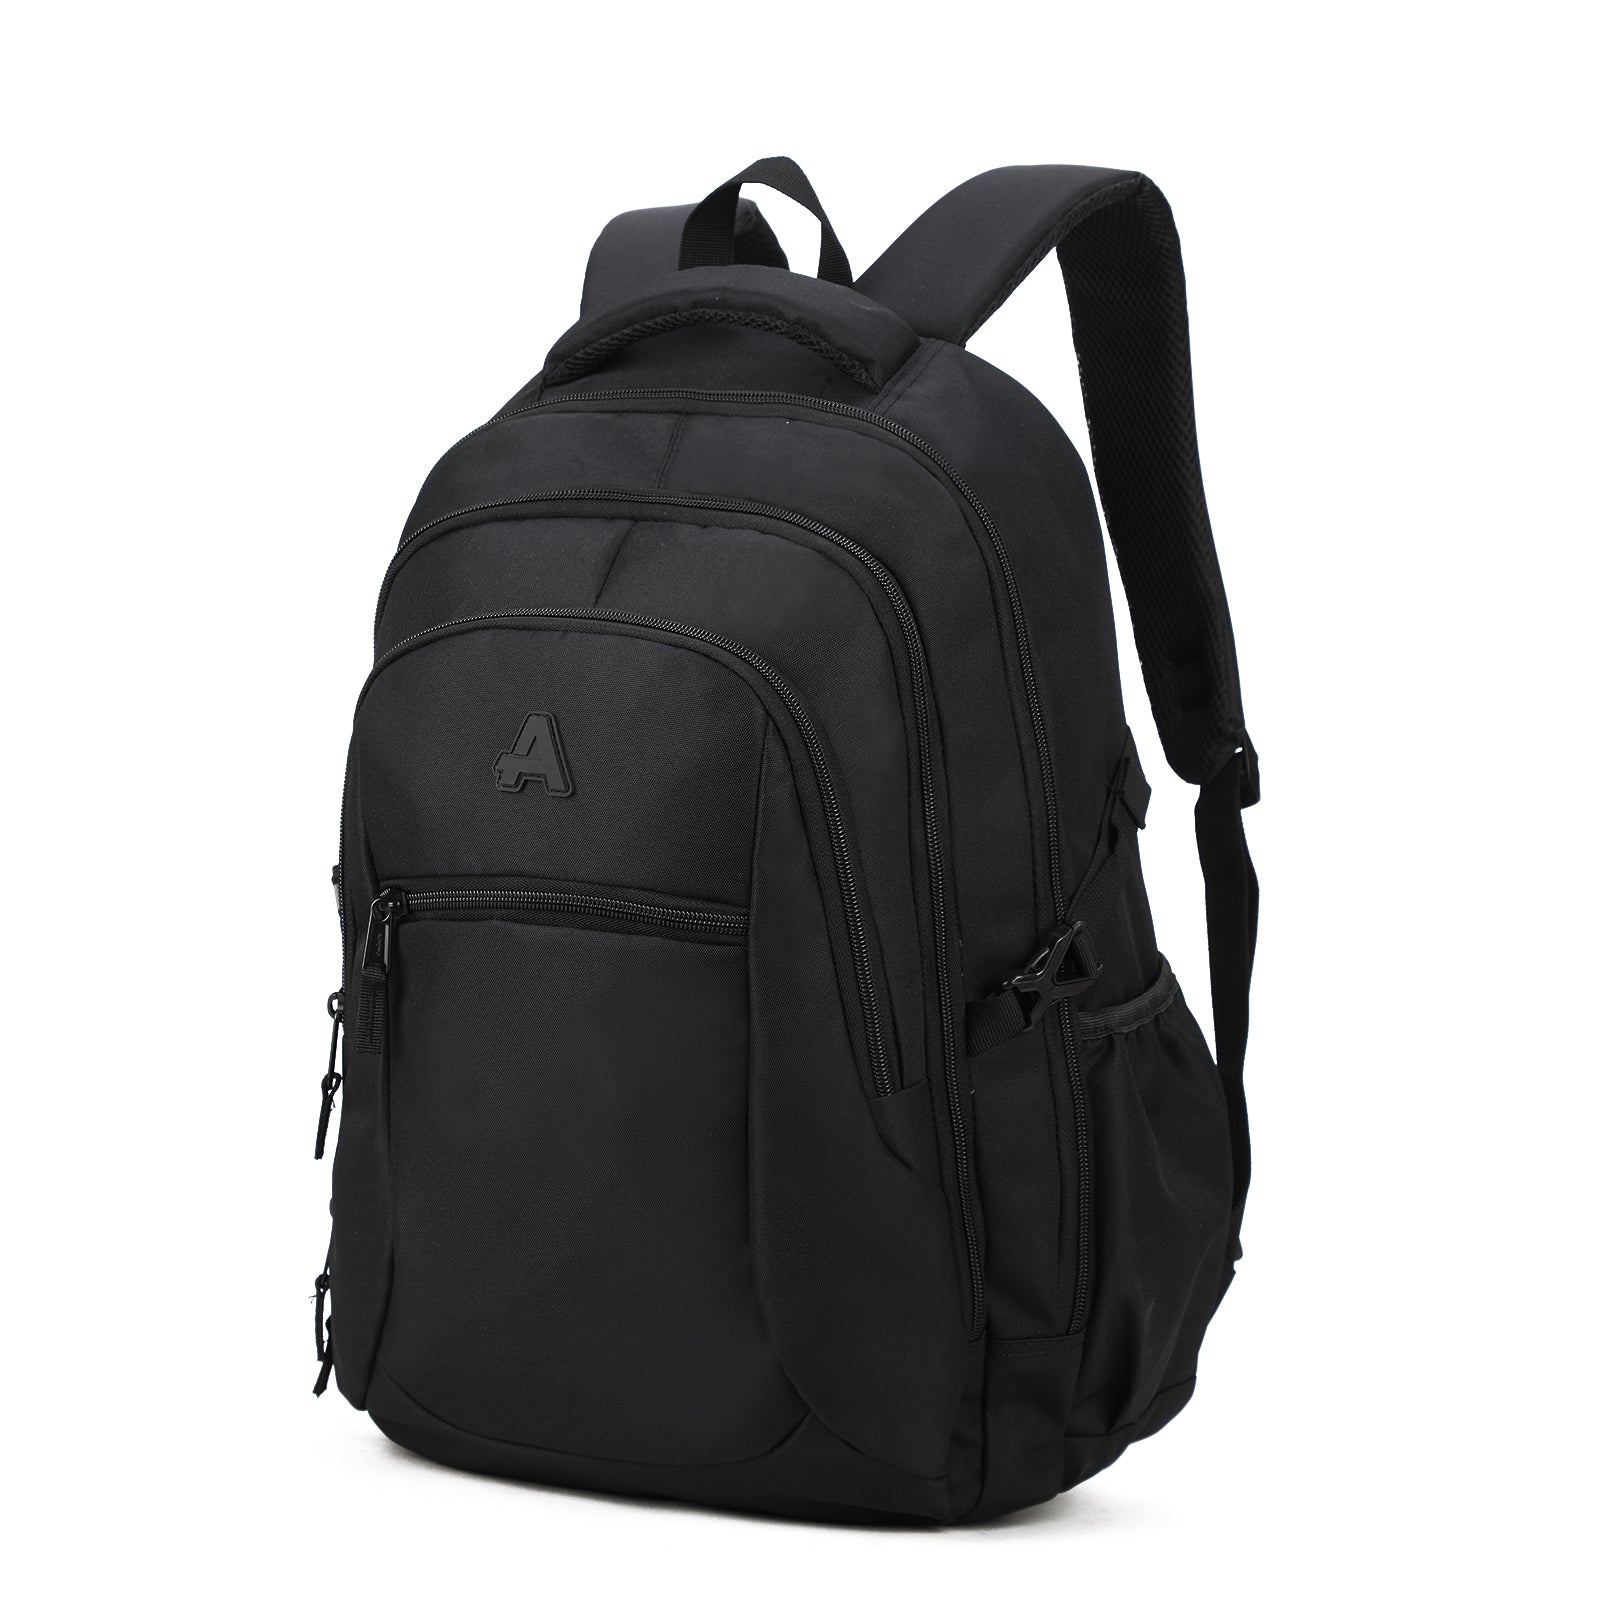 Aoking Travel Backpack SN2677 Black